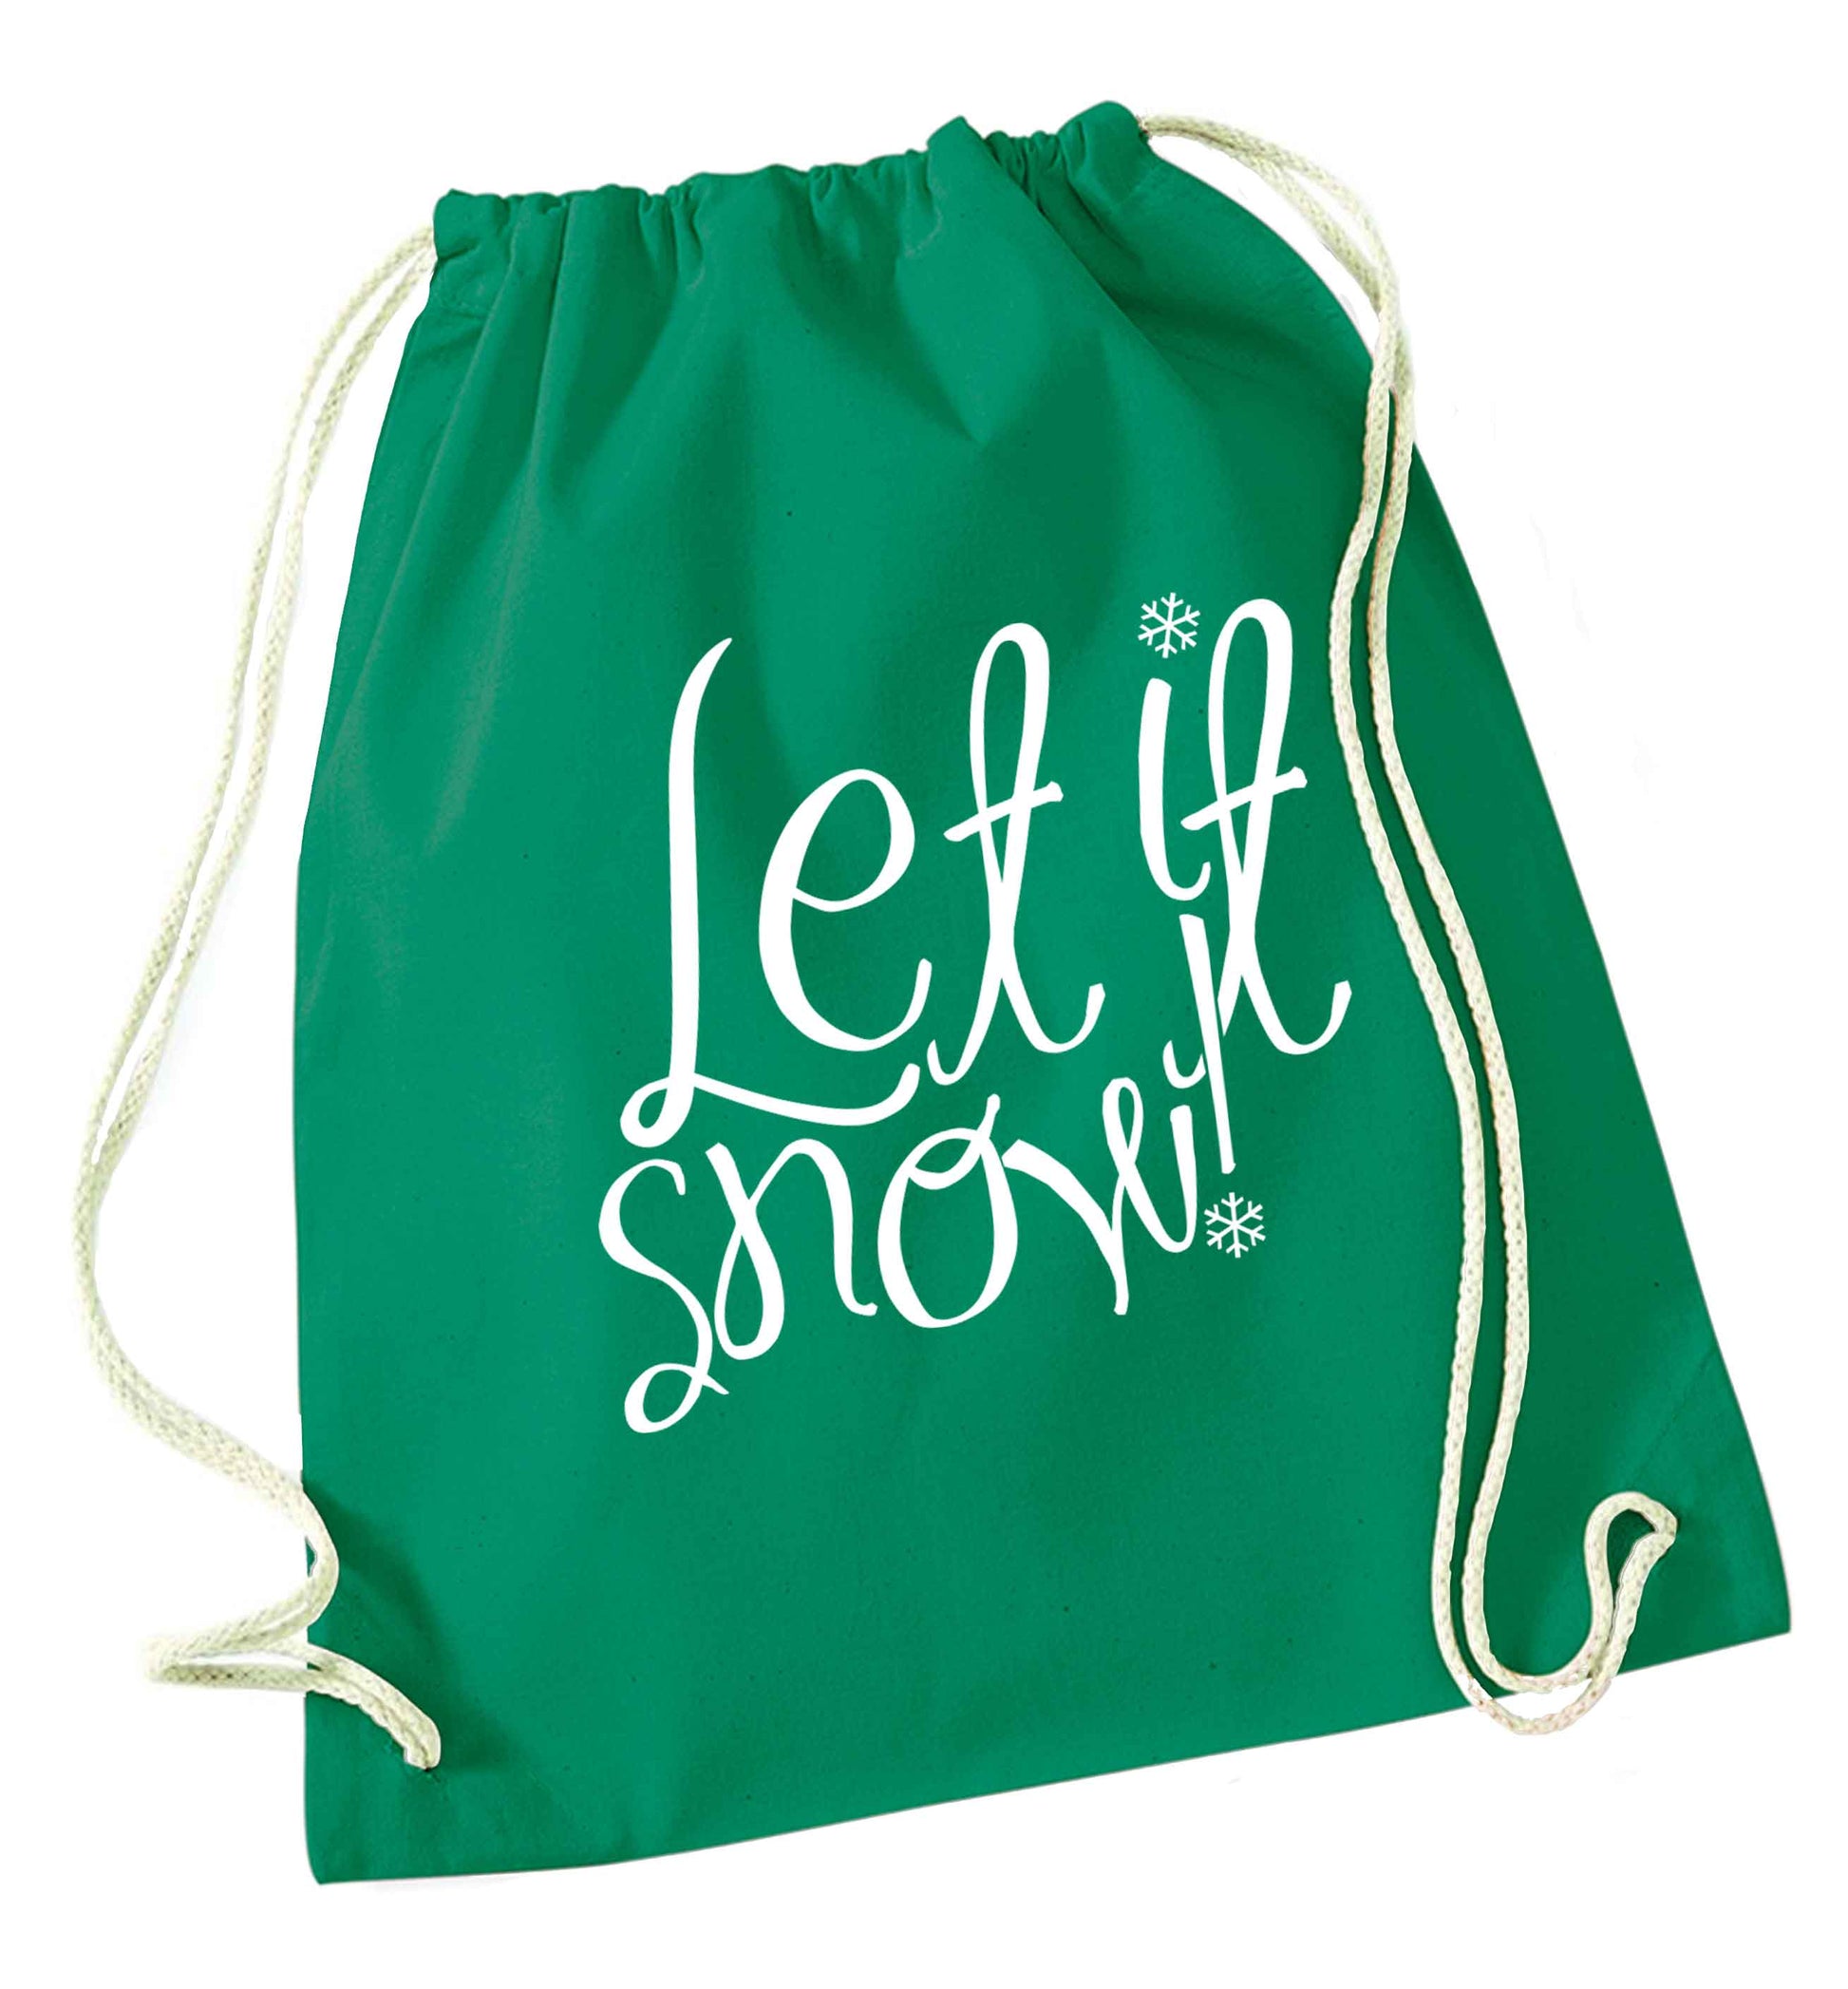 Let it snow green drawstring bag